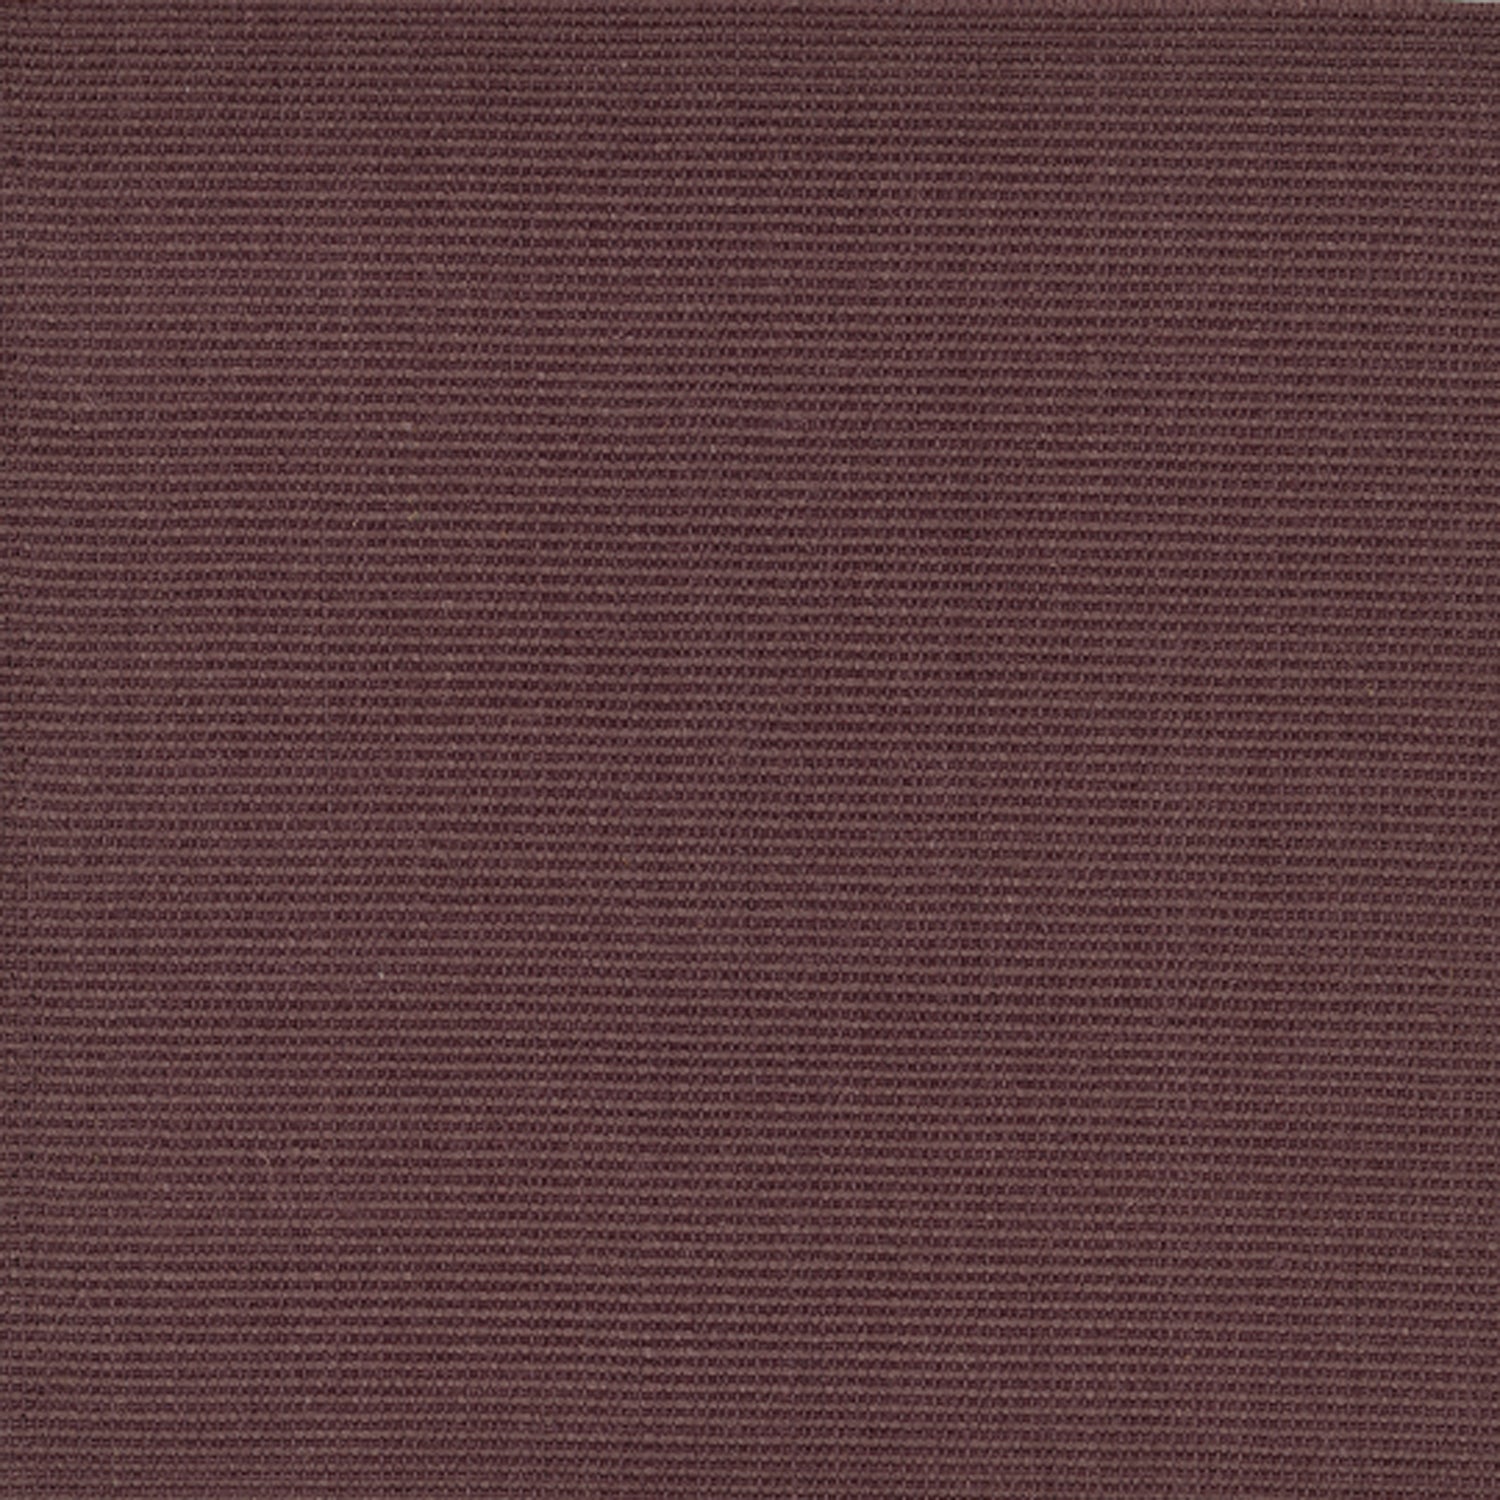 Sisal broadloom carpet swatch in a ribbed weave in "Cityscape" maroon.